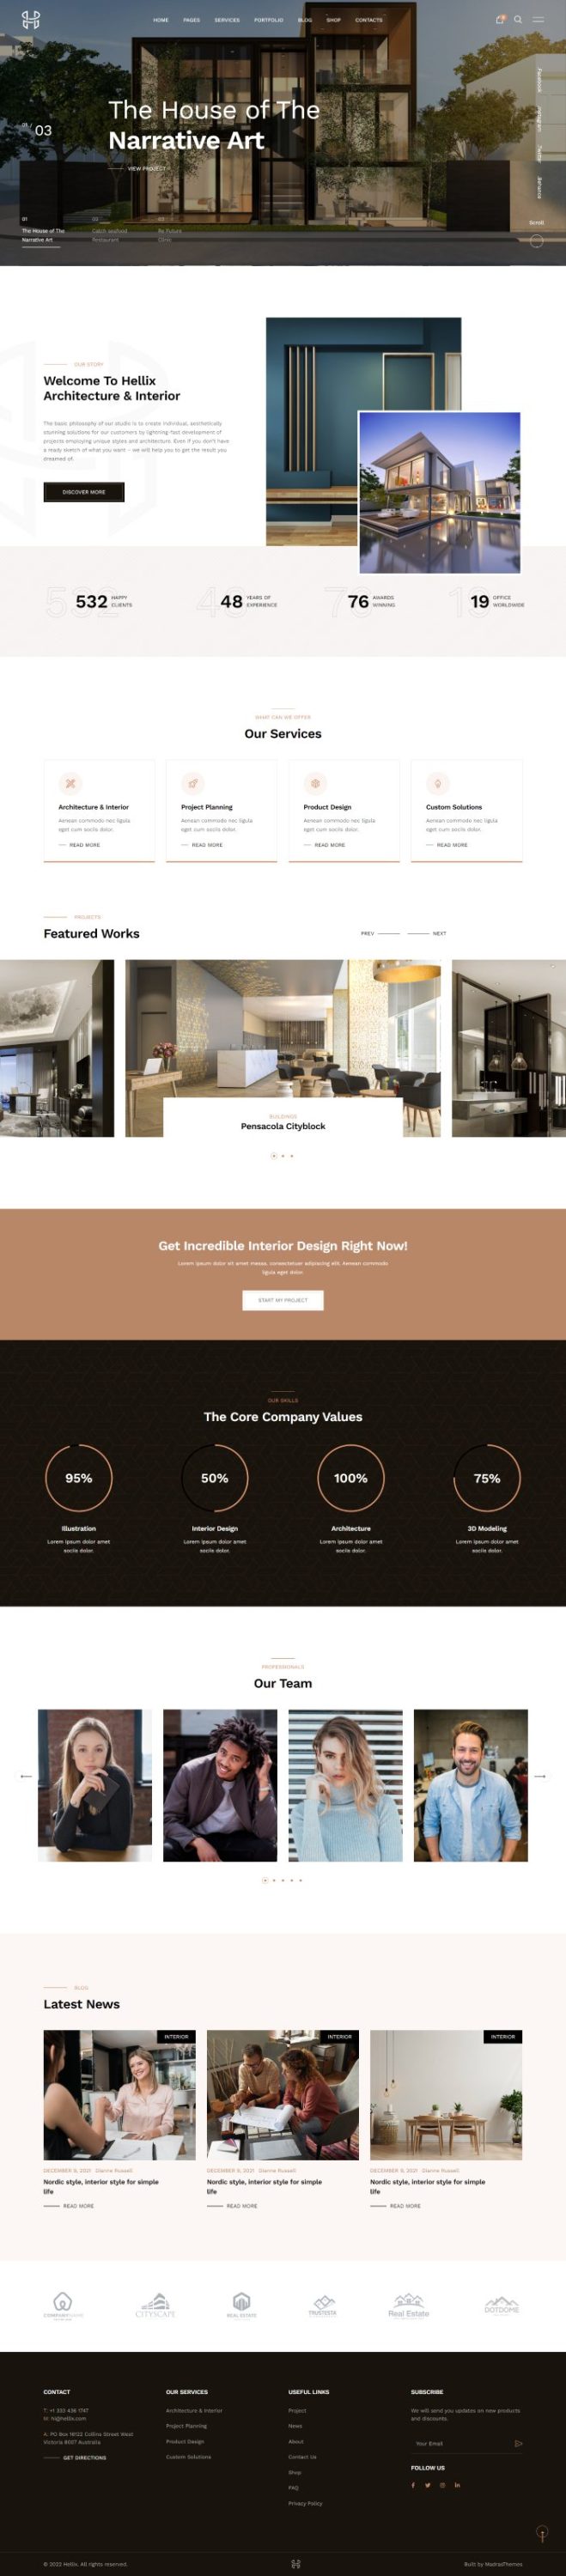 Mẫu website thiết kế nội thất - hellix home 1